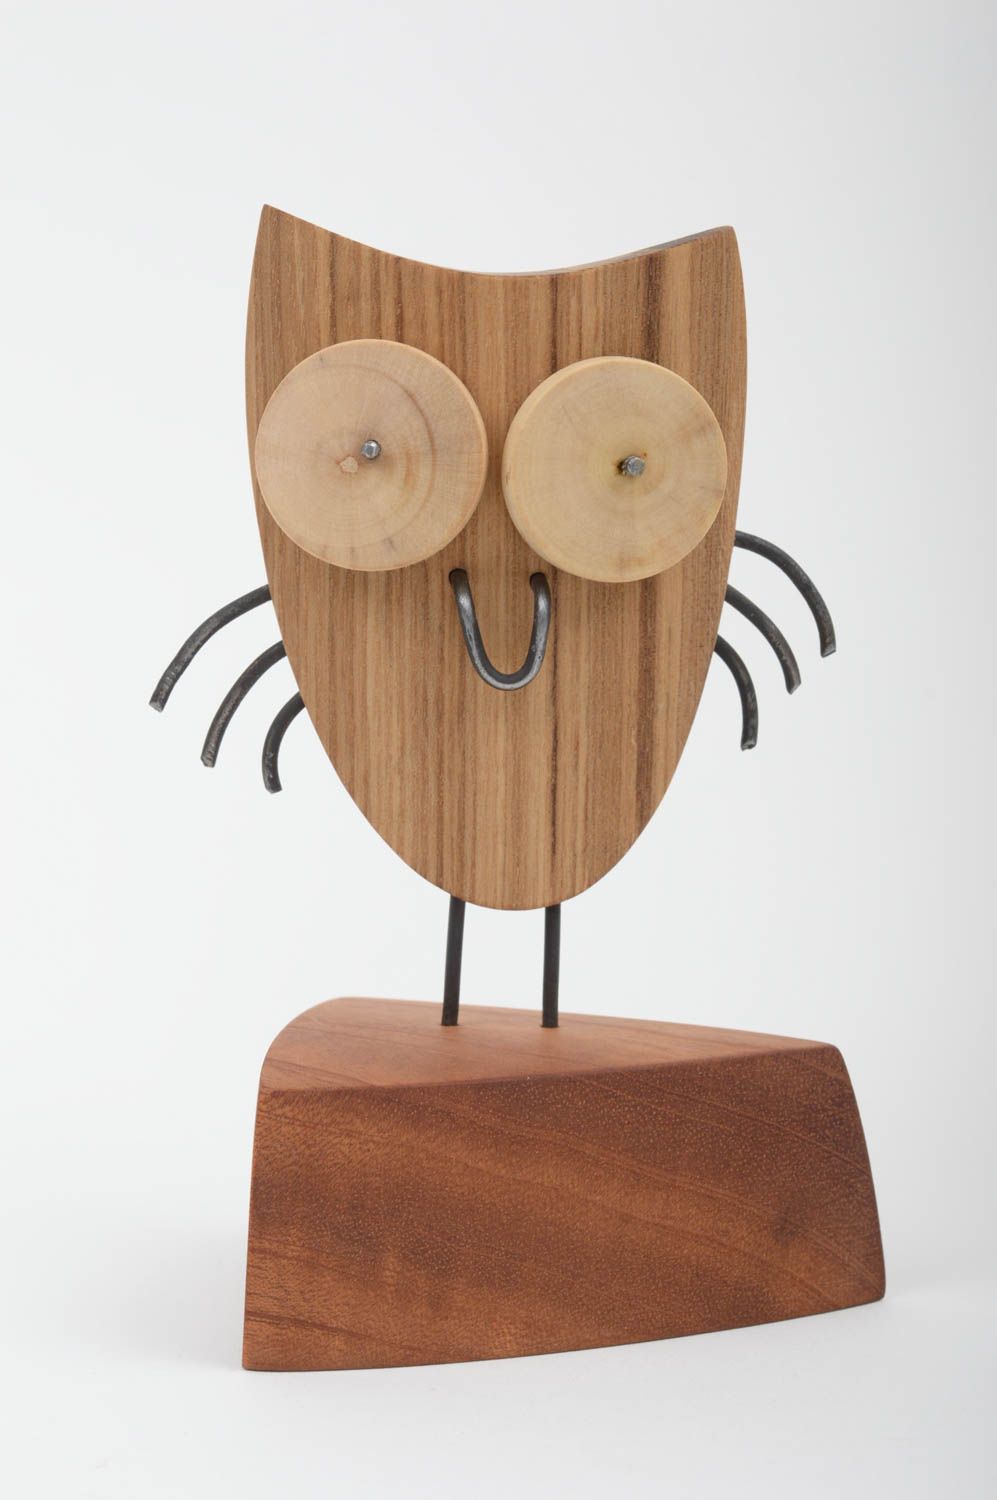 Wooden sculpture souvenir ideas animal figurines table decor wooden gifts photo 1